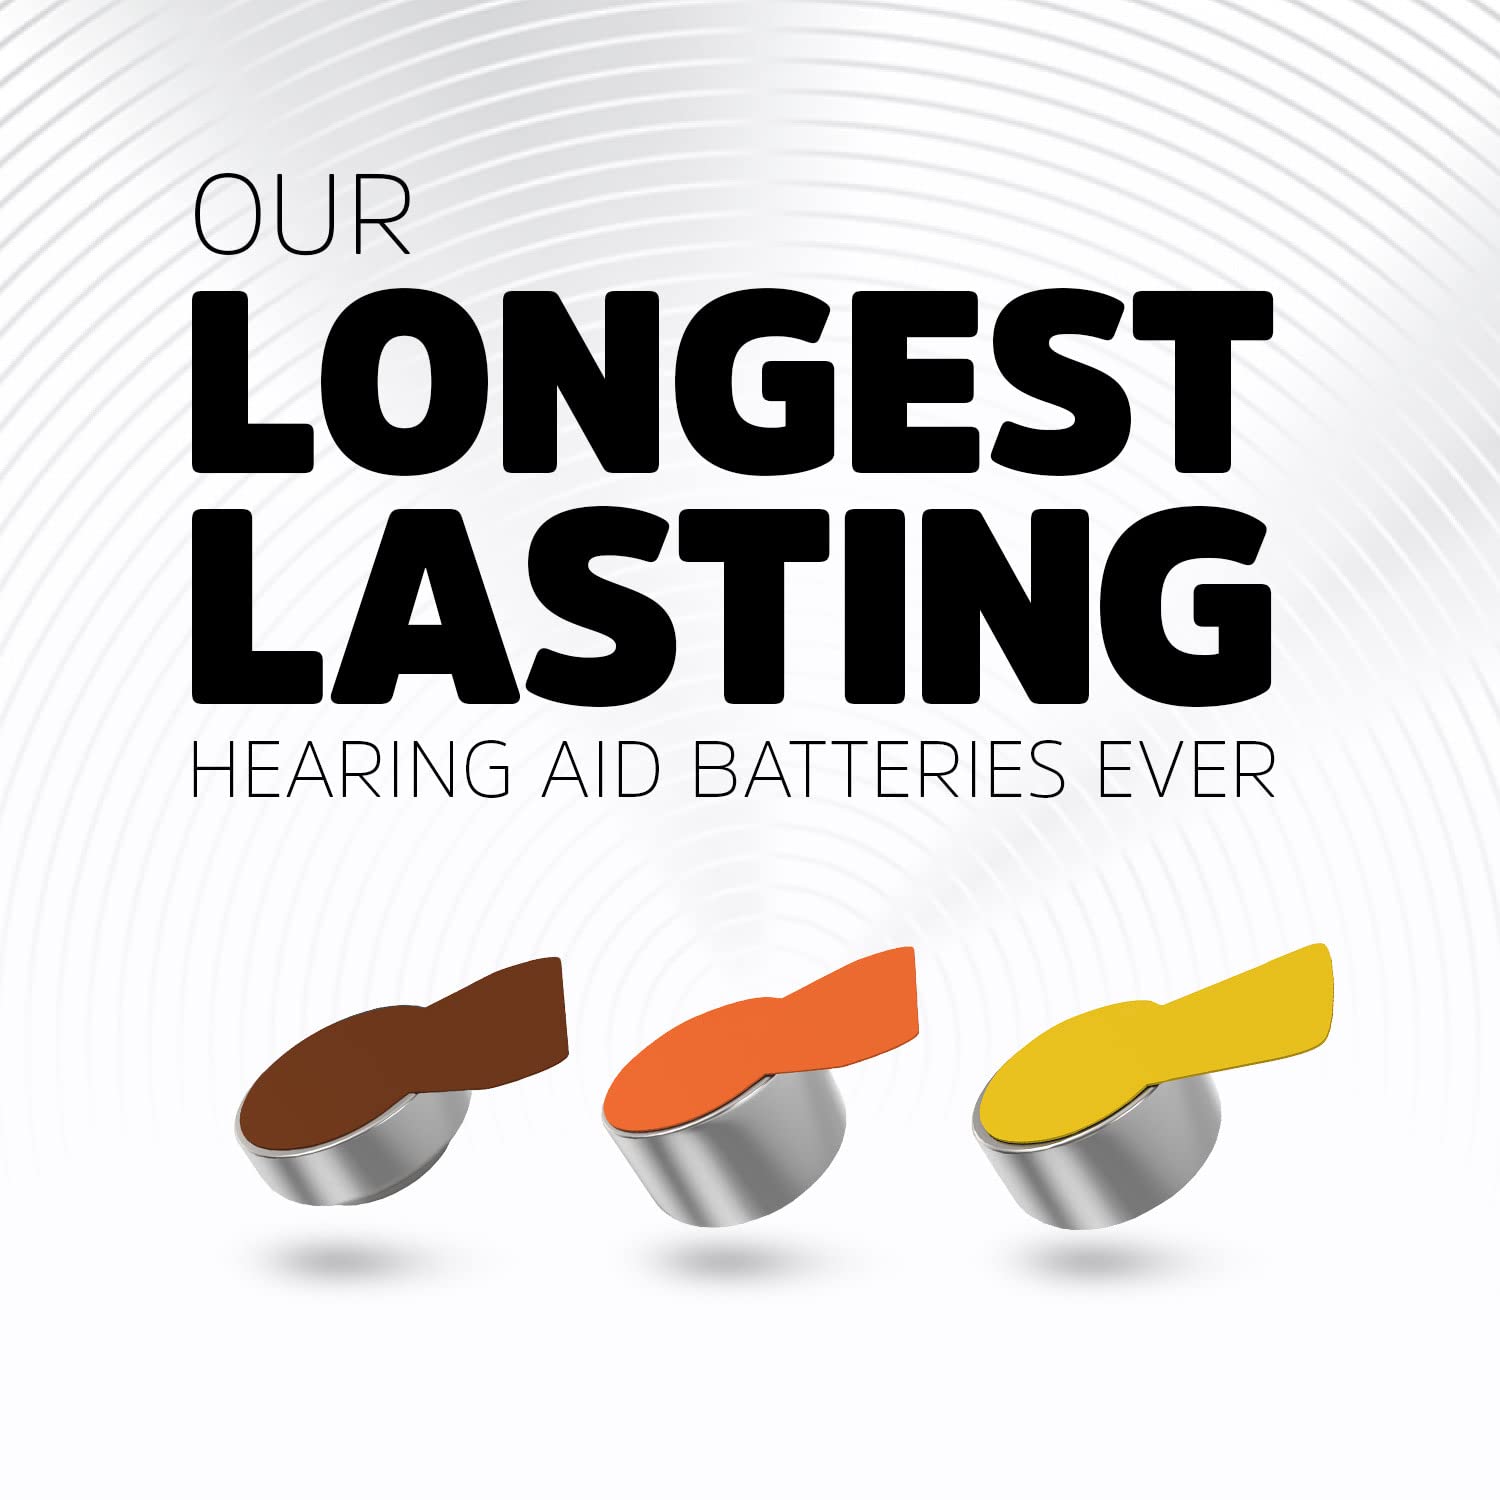 Energizer Size 13 Hearing Aid Batteries, Orange Tab Hearing Aid Batteries Size 13, 16 Count